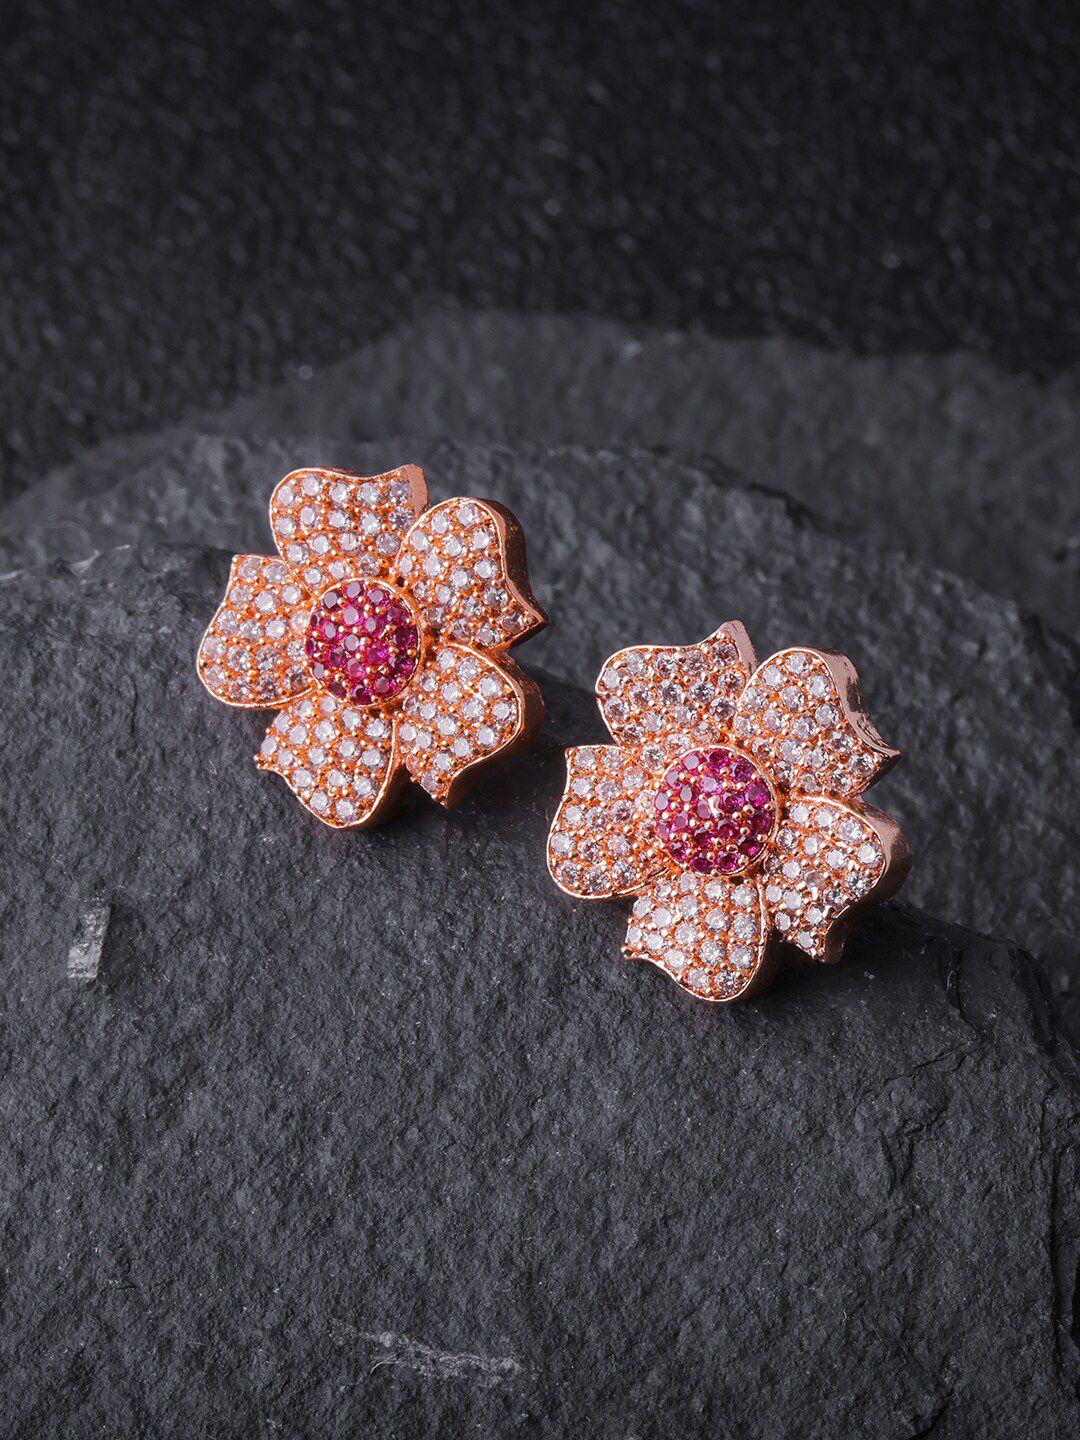 brandsoon rose gold-plated floral studs earrings